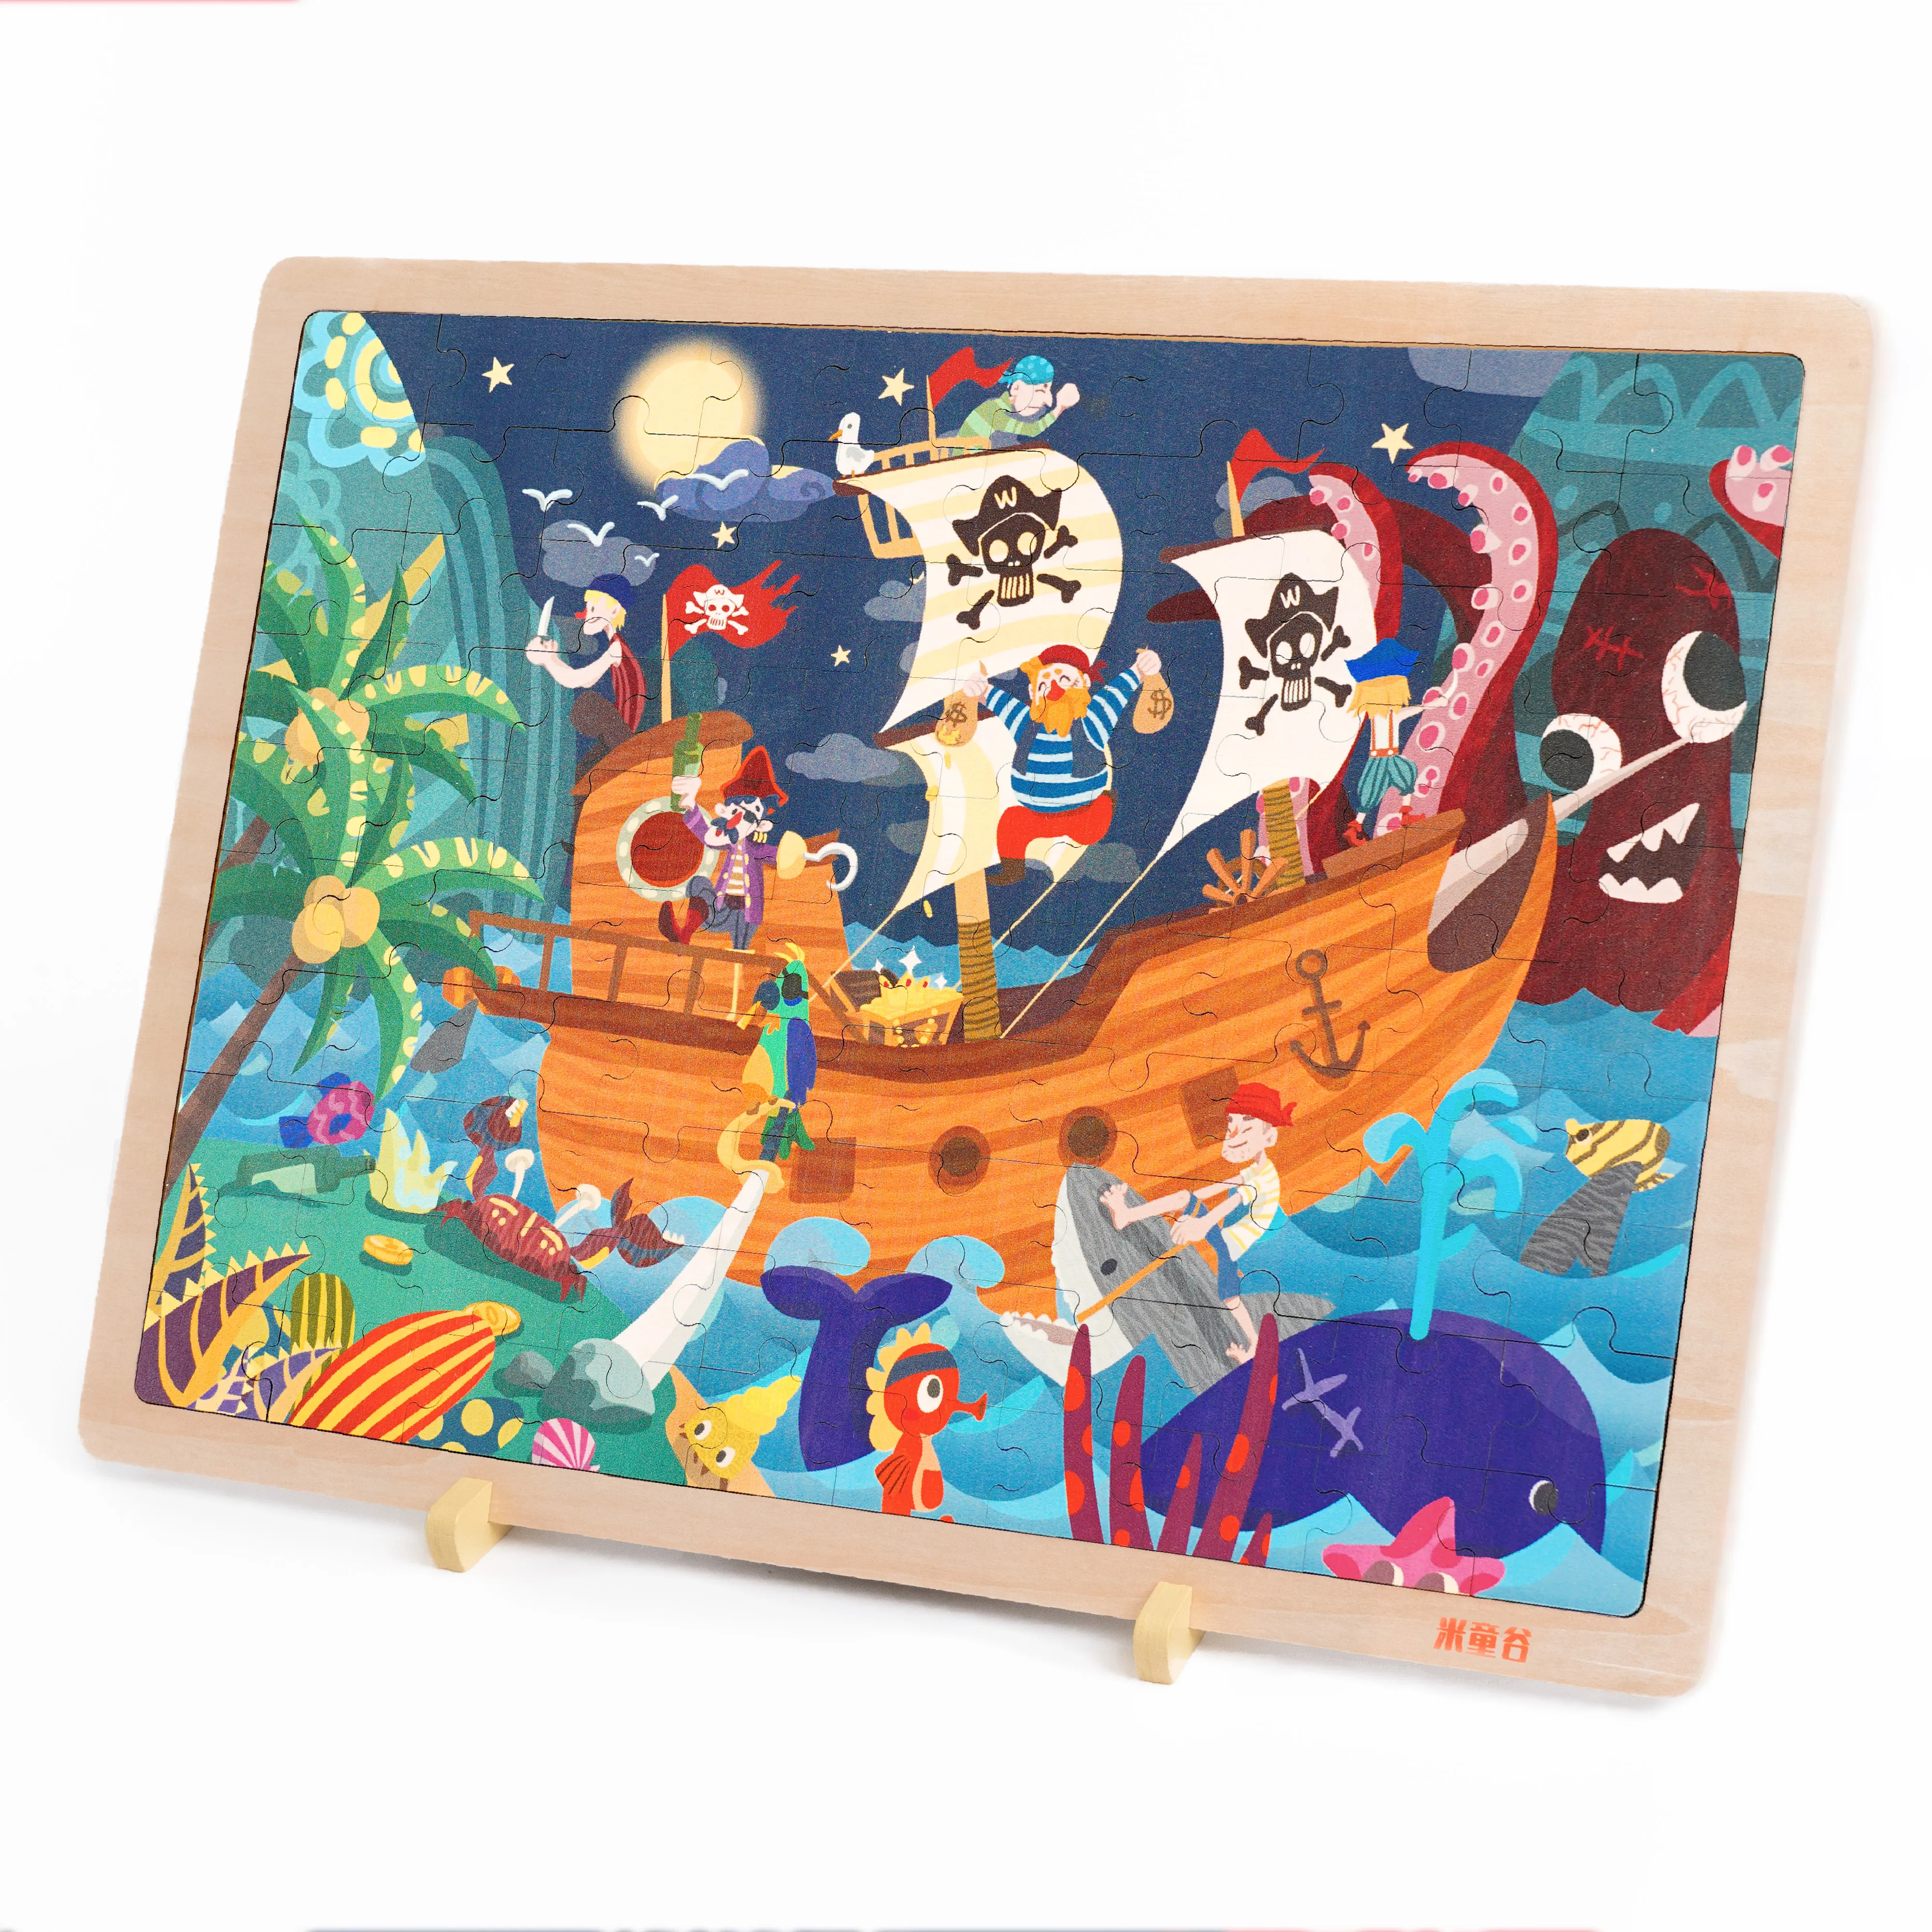 Rompecabezas clásico de 40x30x0,8 cm, barco pirata, juguete educativo colorido, rompecabezas, gran oferta, 100 Uds.